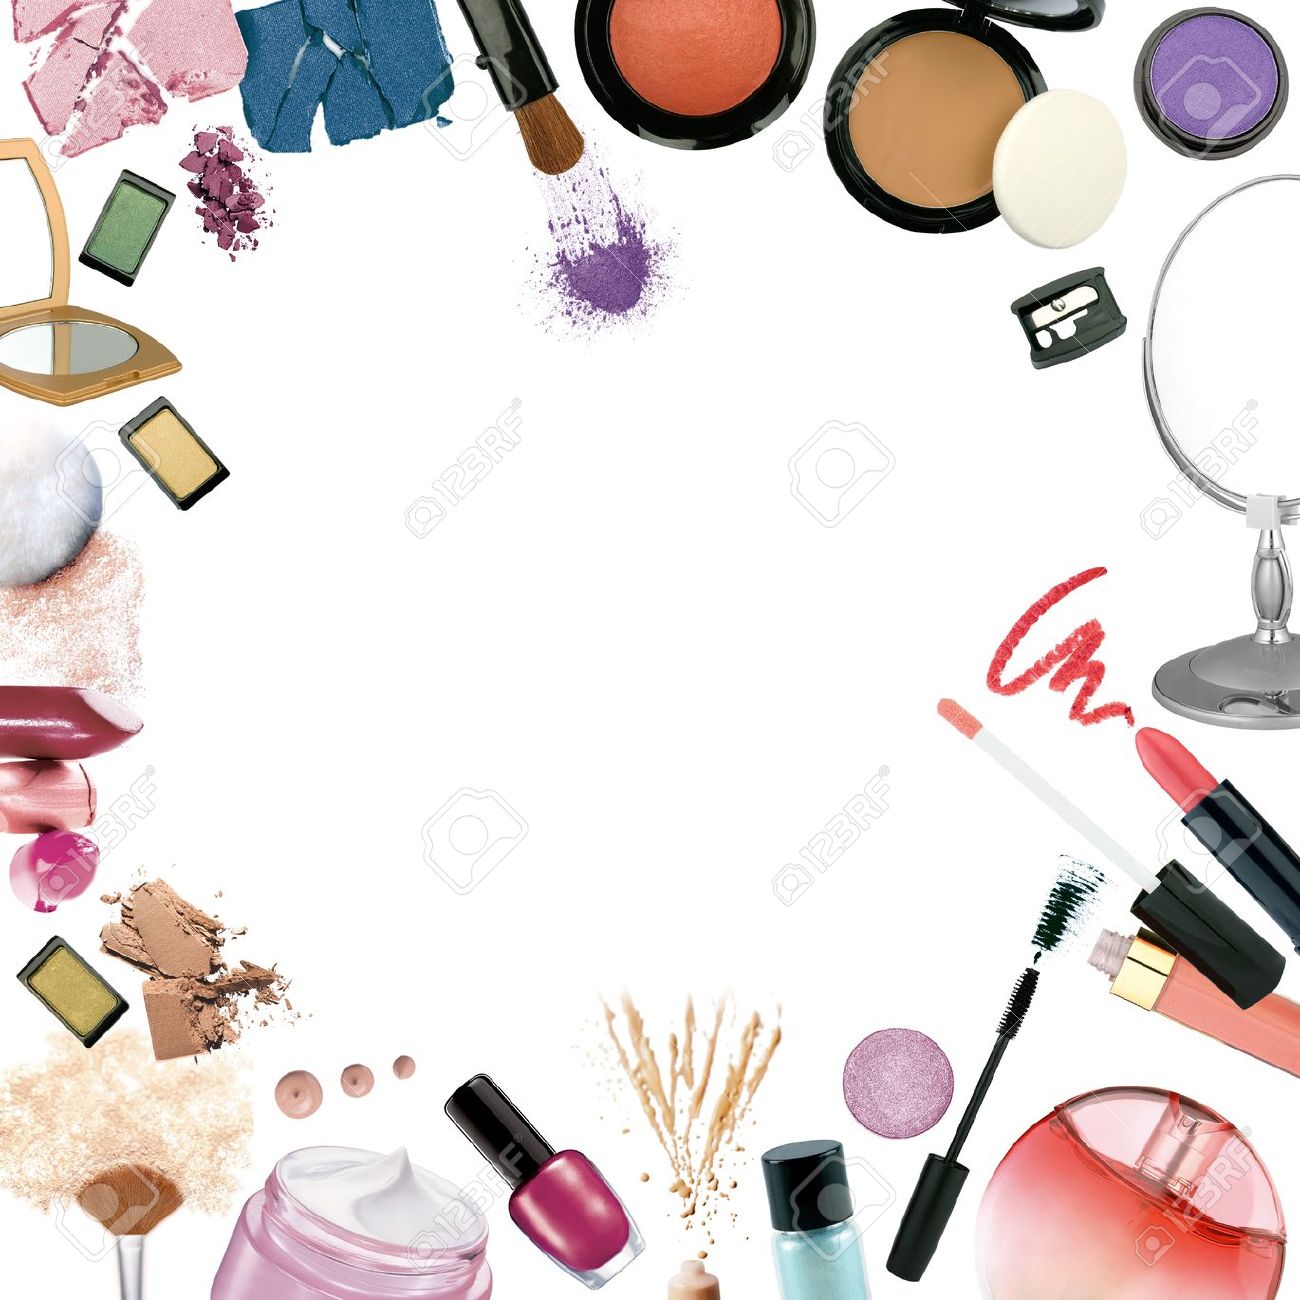 makeup wallpaper tumblr,cosmetics,beauty,illustration,eye shadow,stock photography